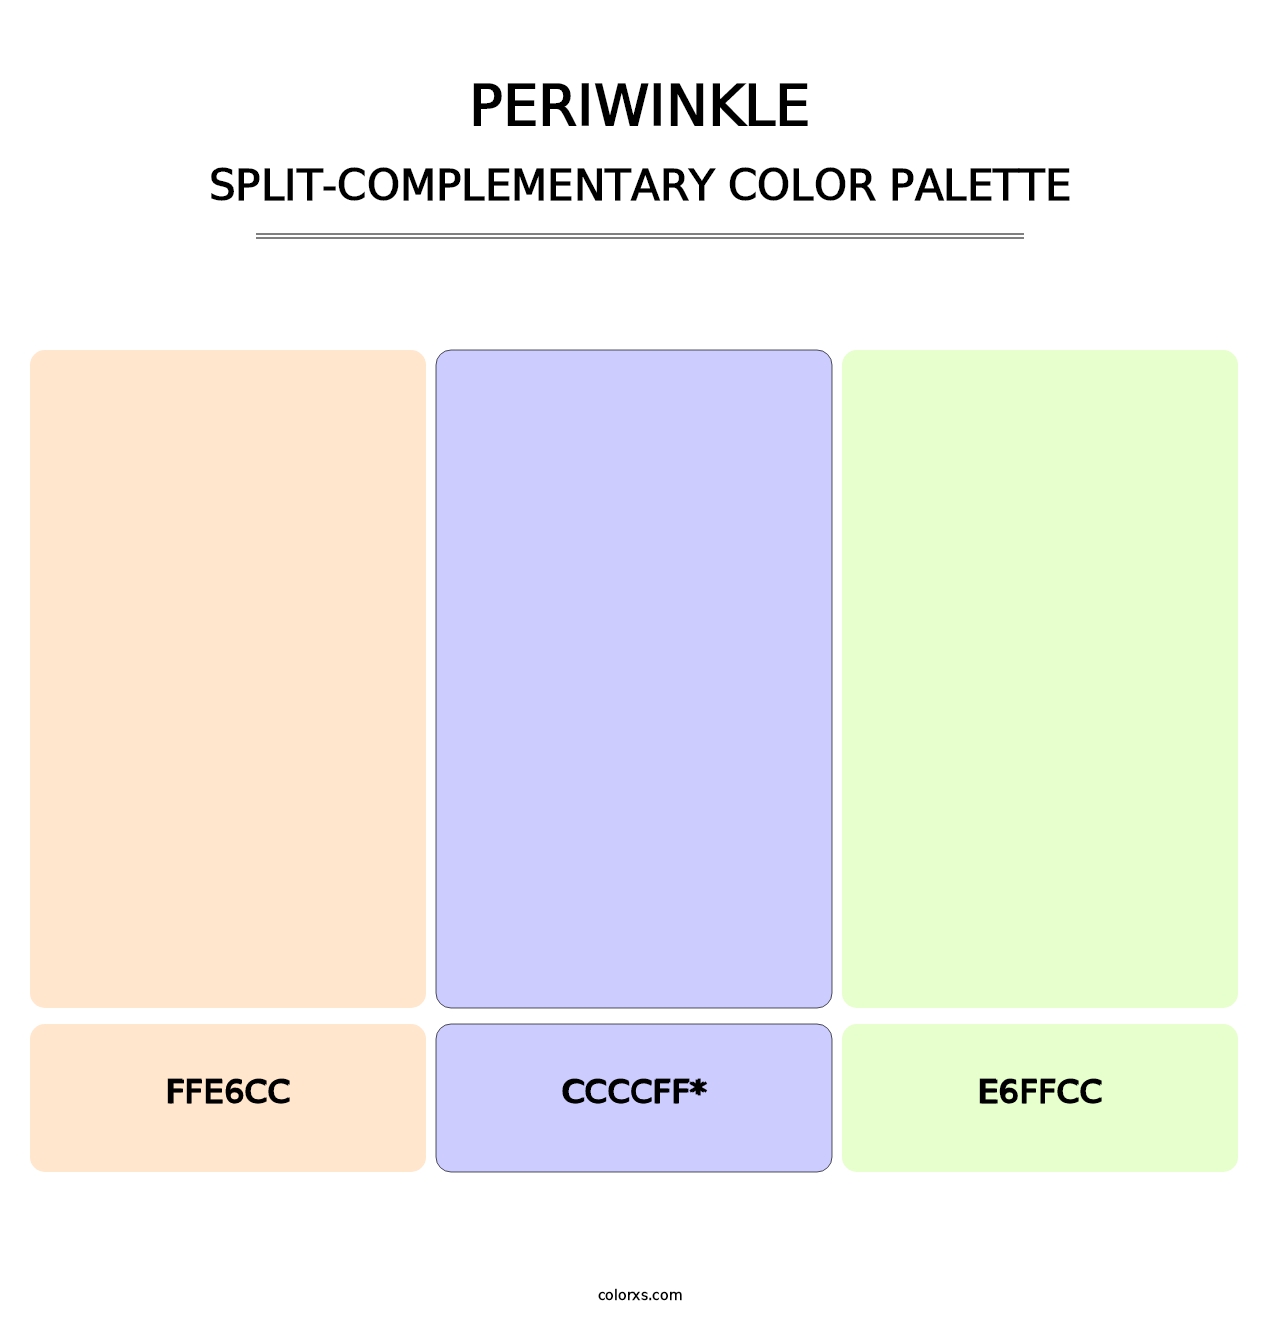 Periwinkle - Split-Complementary Color Palette